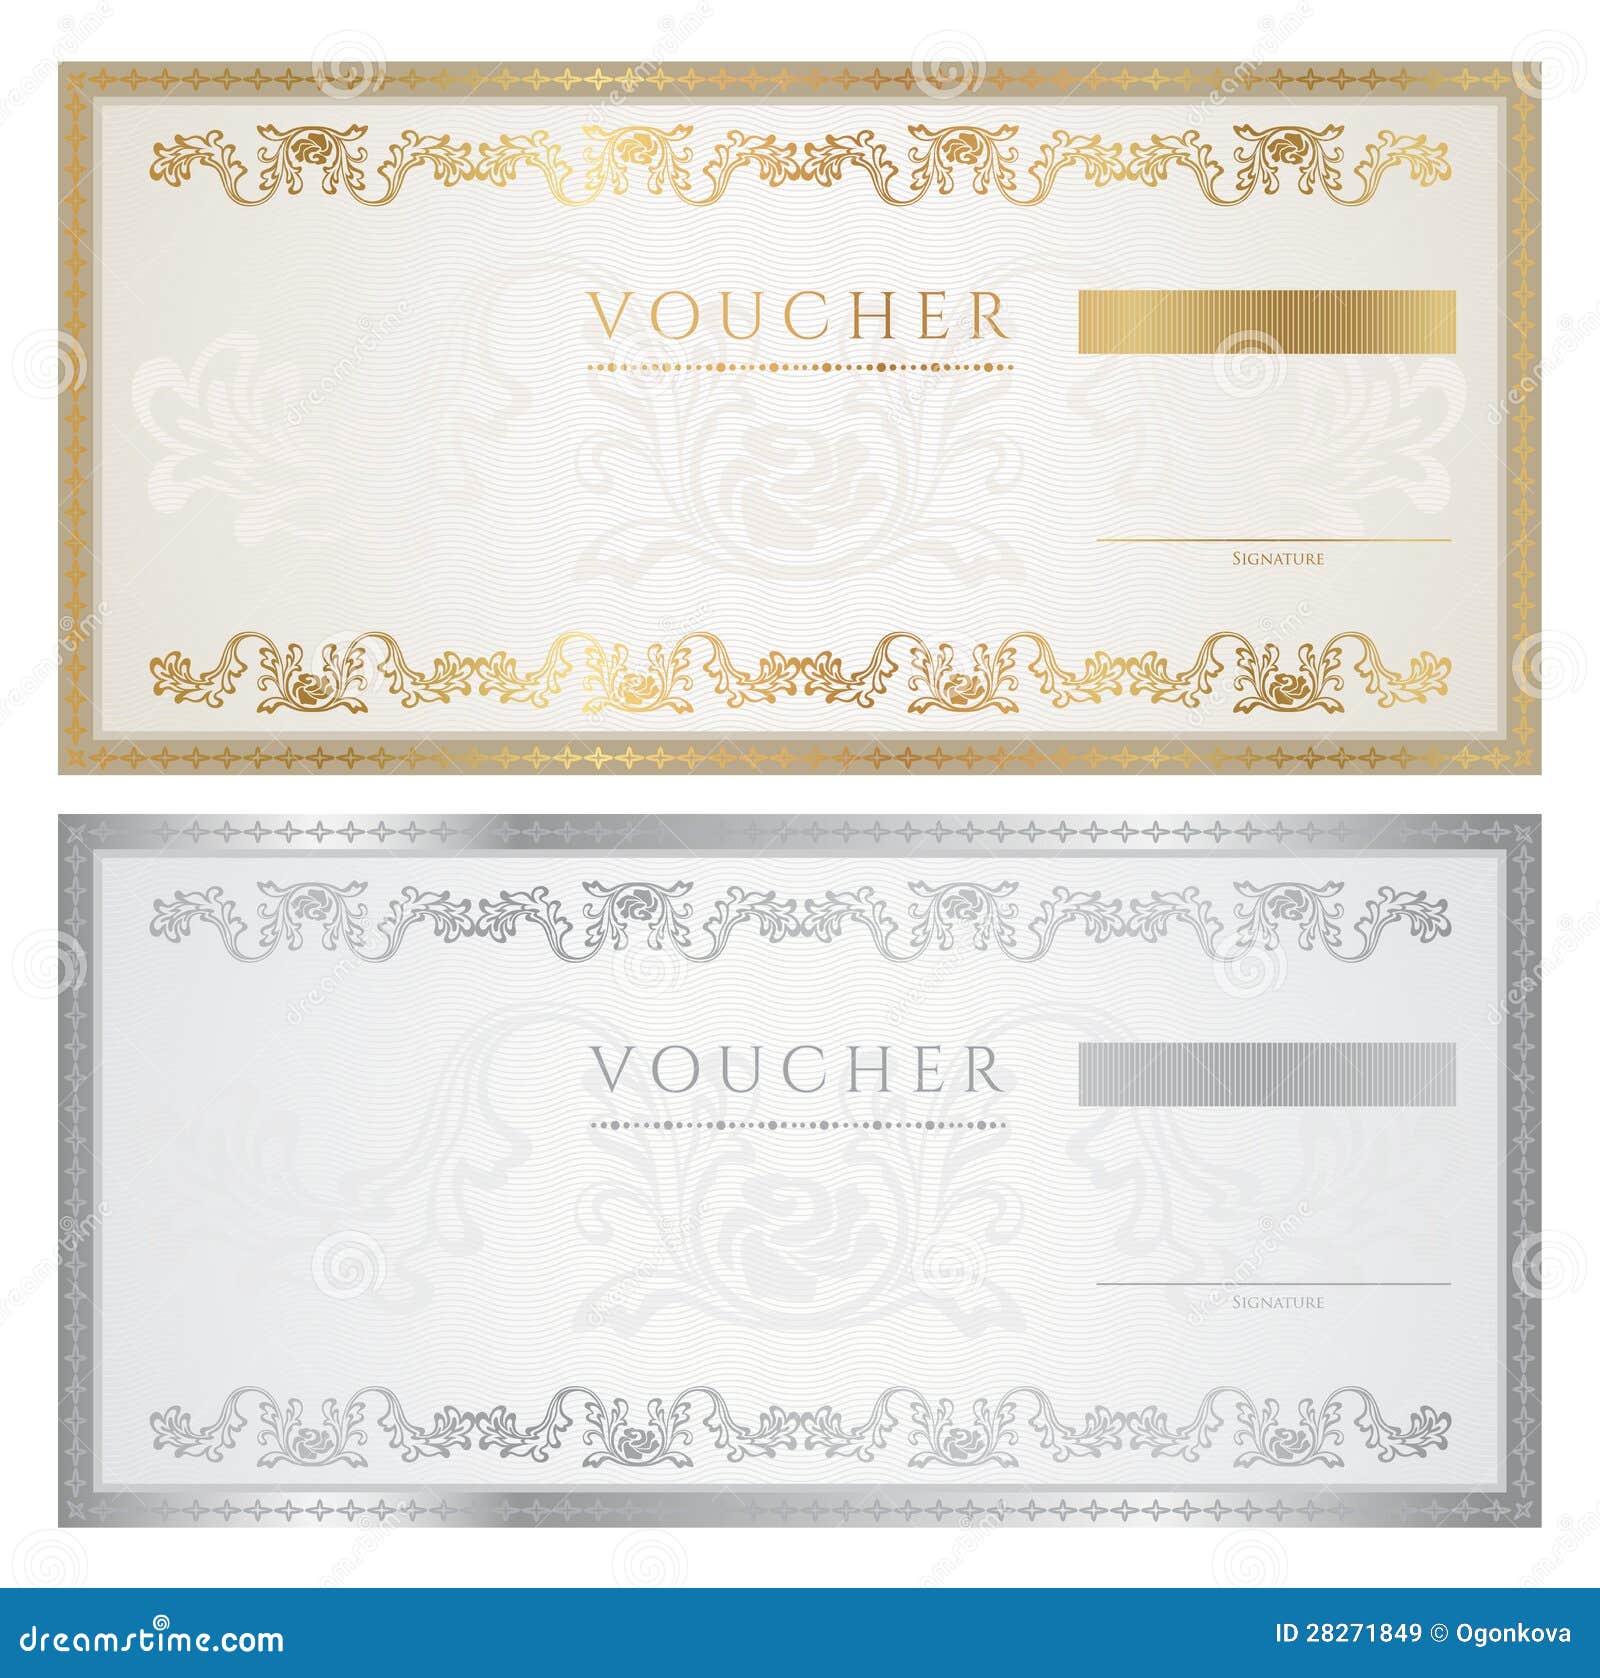 voucher / coupon